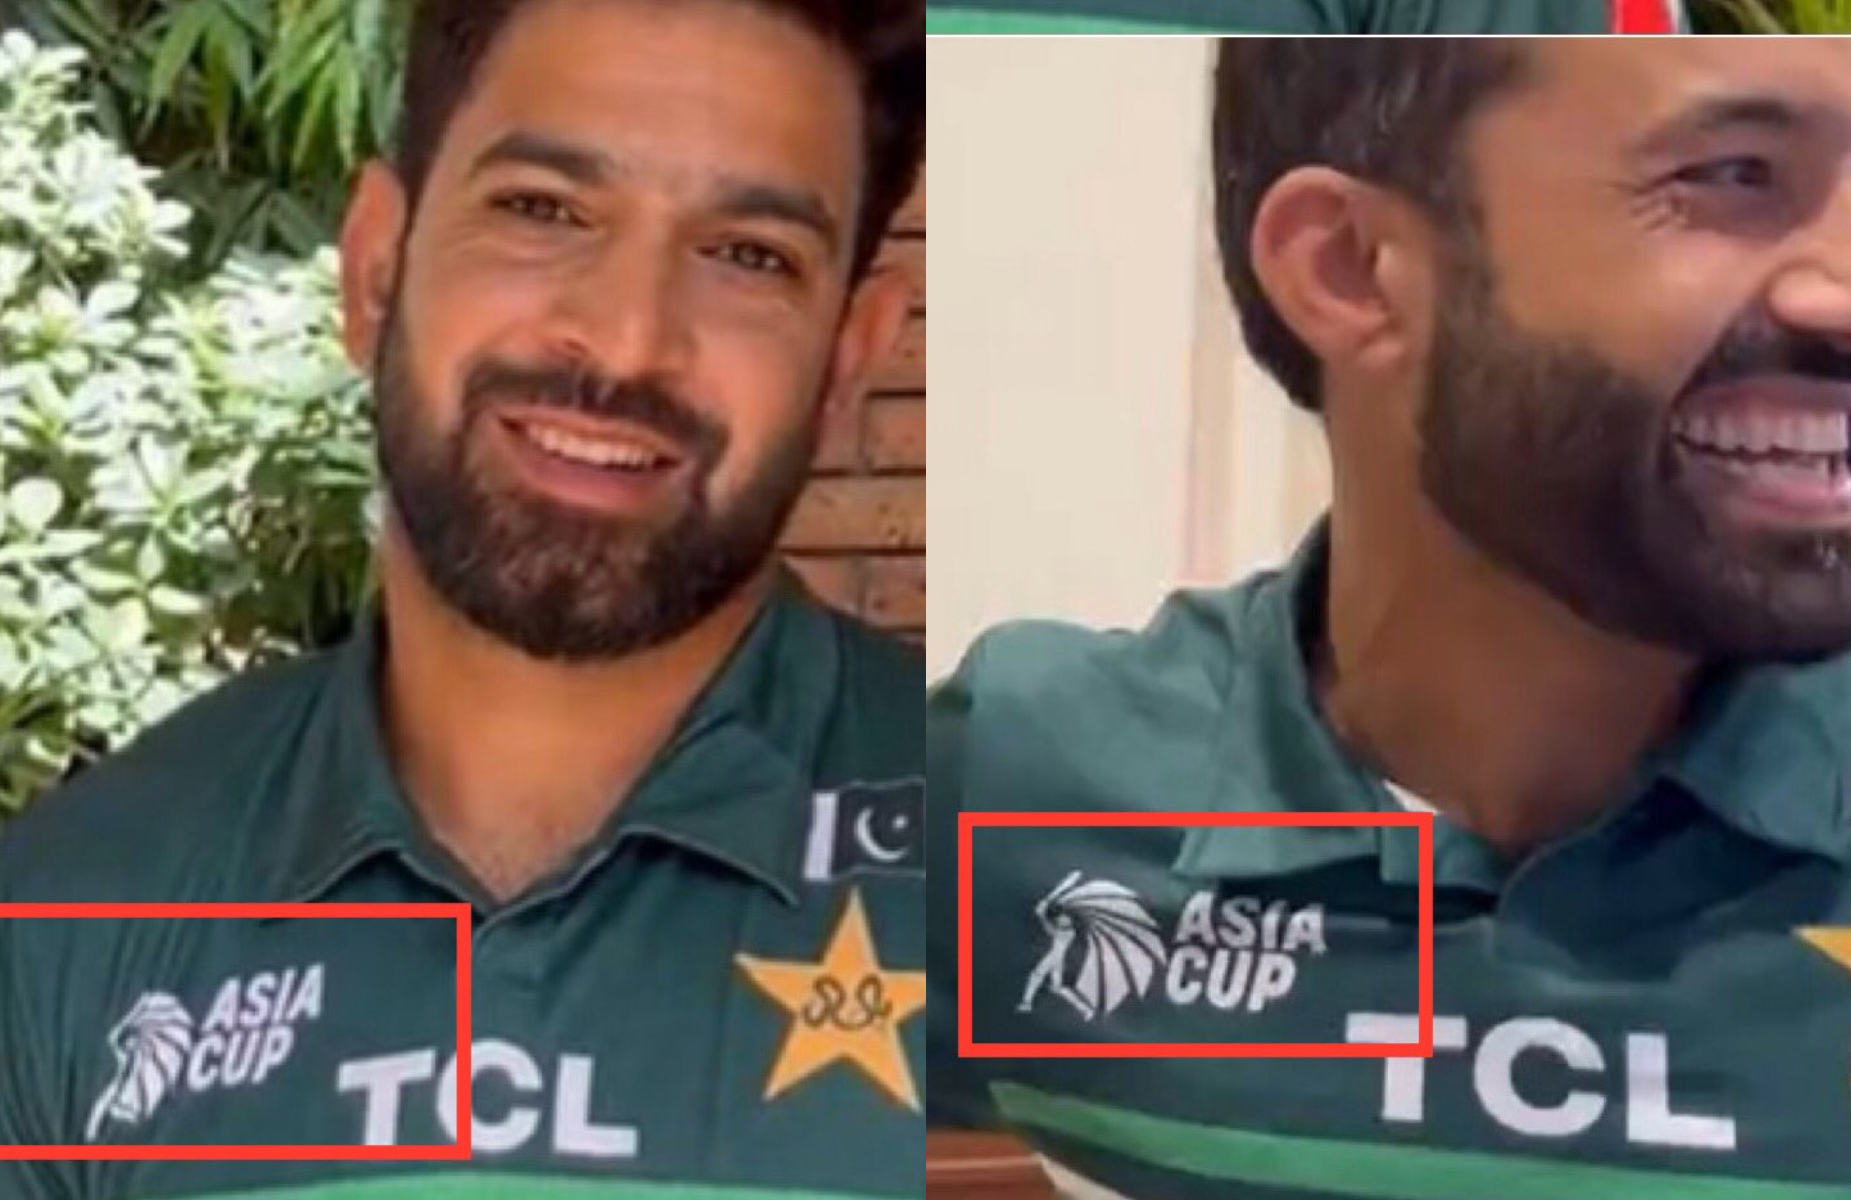 No Pakistan written beneath the Asia Cup on jerseys | X